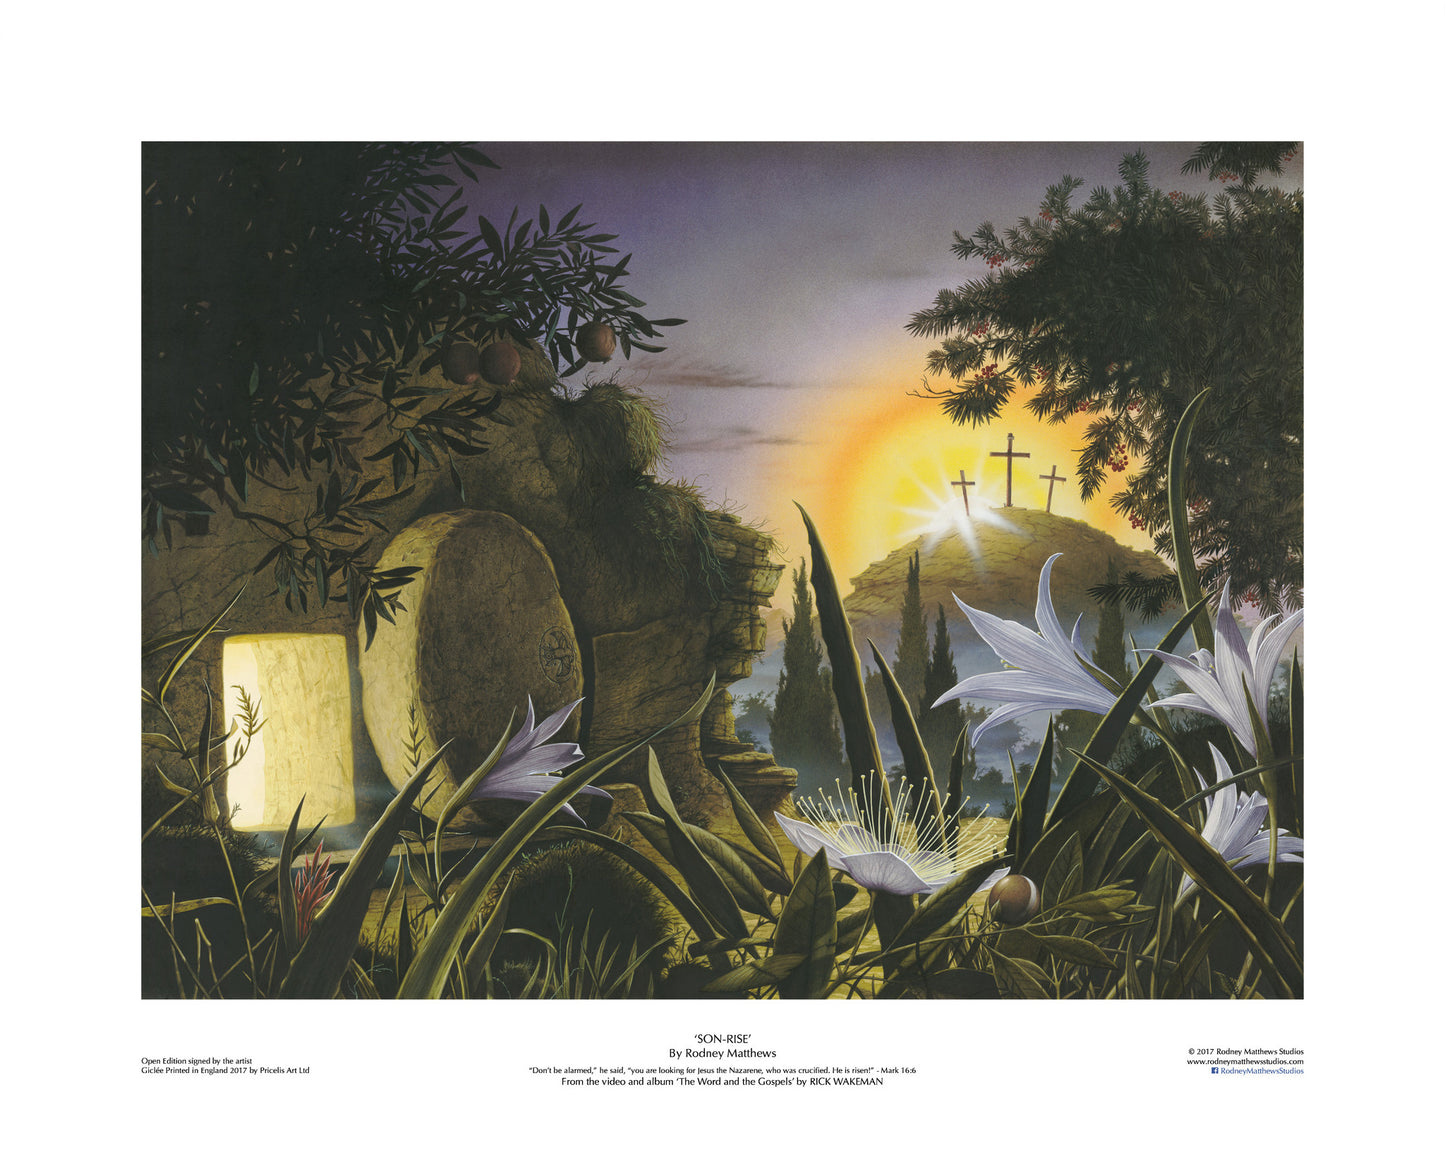 Son-Rise (Open Edition Print) a Rick Wakeman album cover by Rodney Matthews | Rodney Matthews Studios